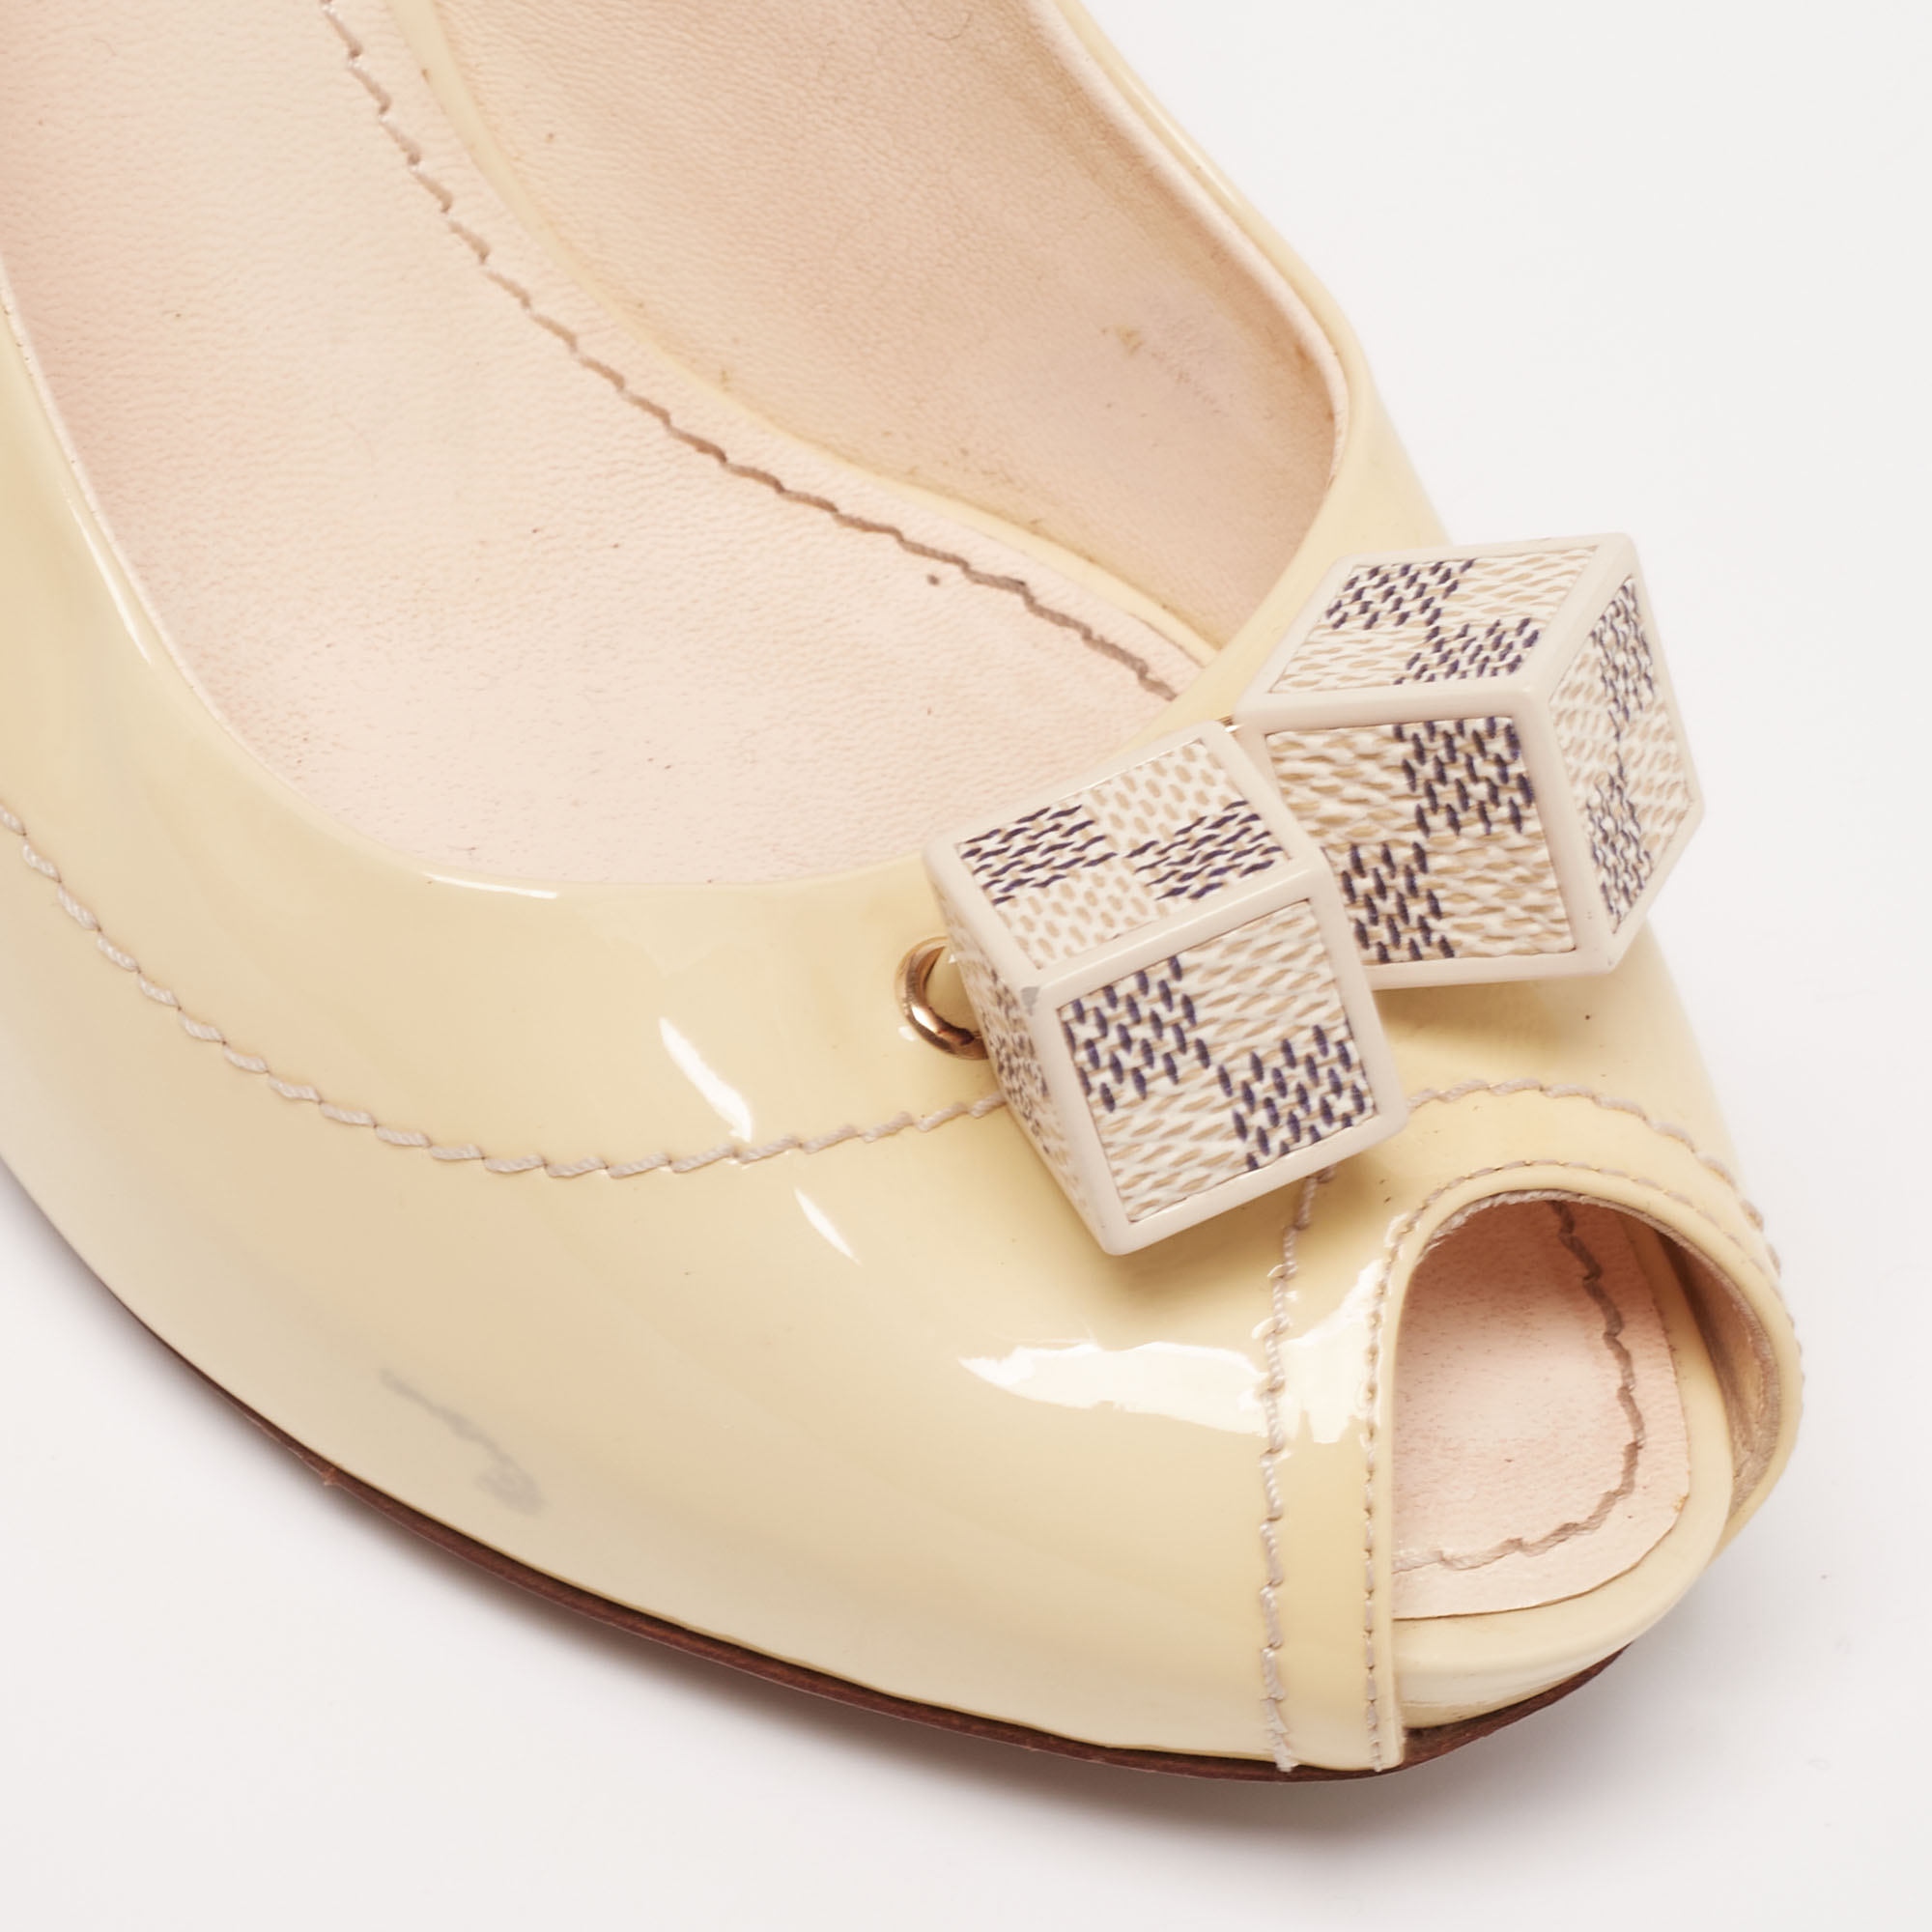 Louis Vuitton Cream Patent Leather Dice Peep Toe Slingback Sandals Size 37